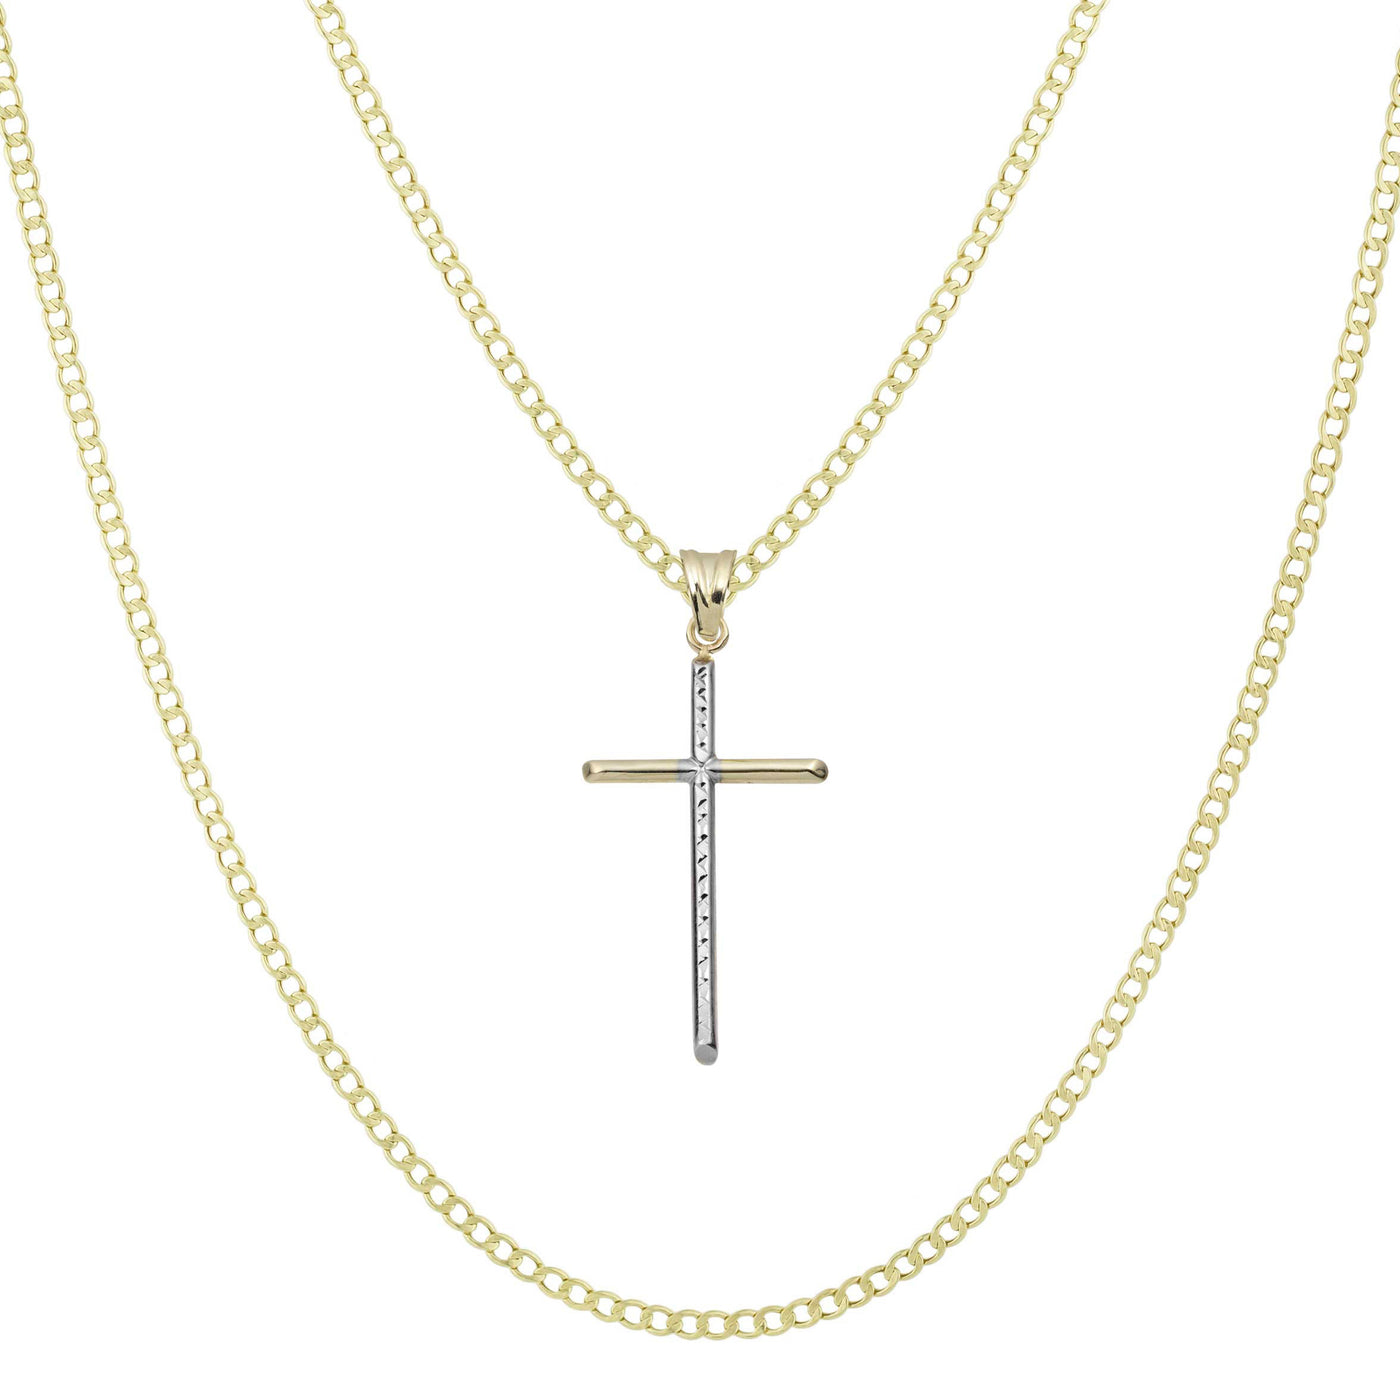 1 3/4" Diamond-Cut Thin Cross Pendant & Chain Necklace Set 10K Yellow White Gold